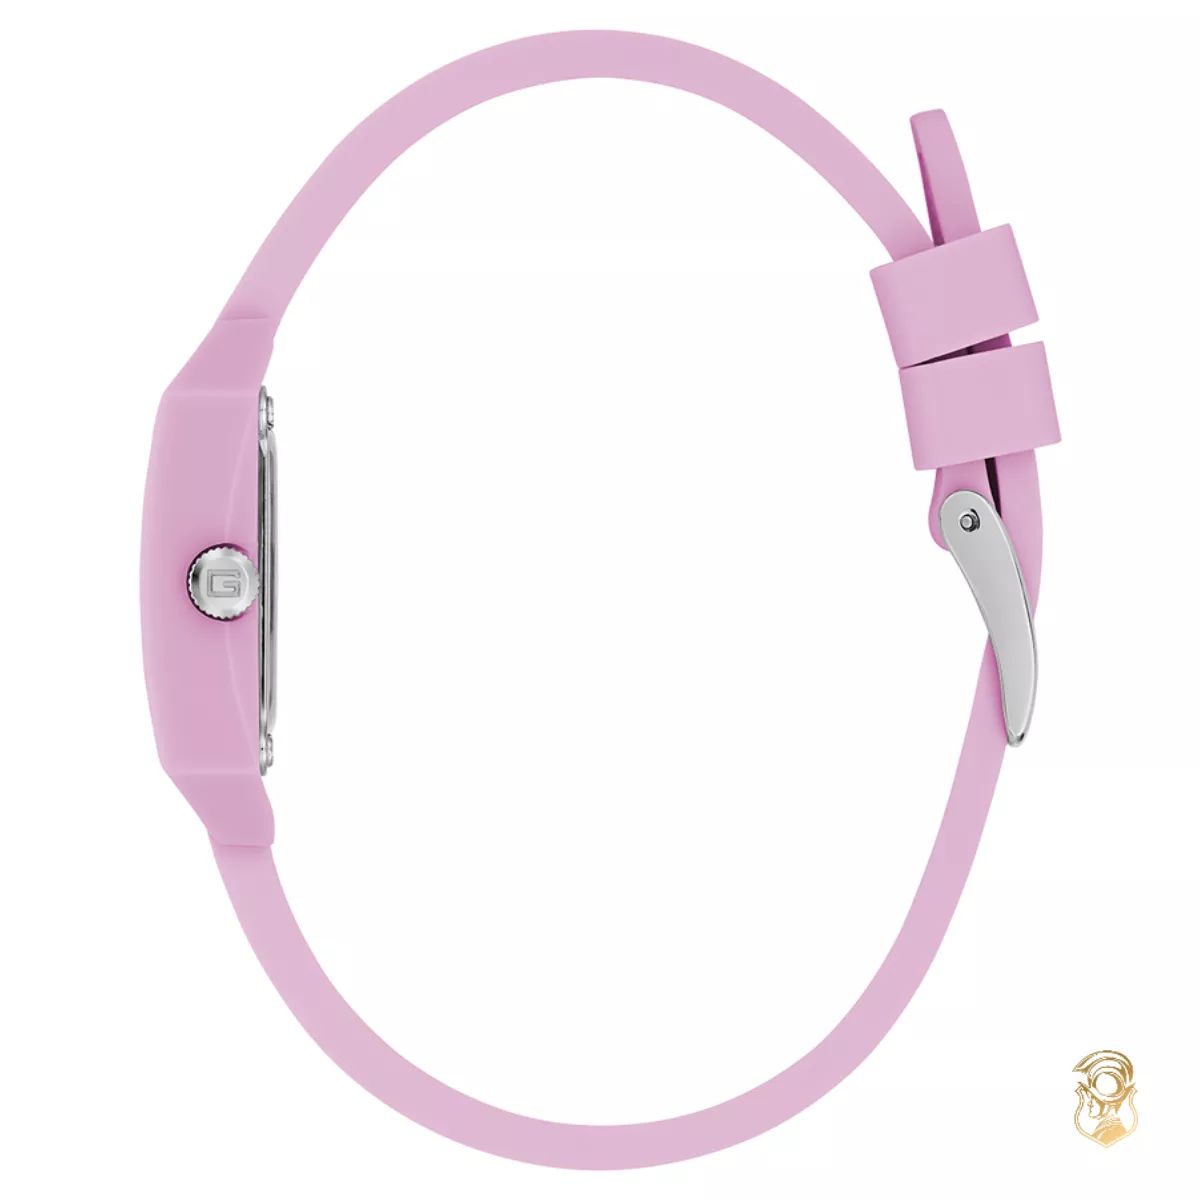 Guess Logo Pink Tone Watch 33mm